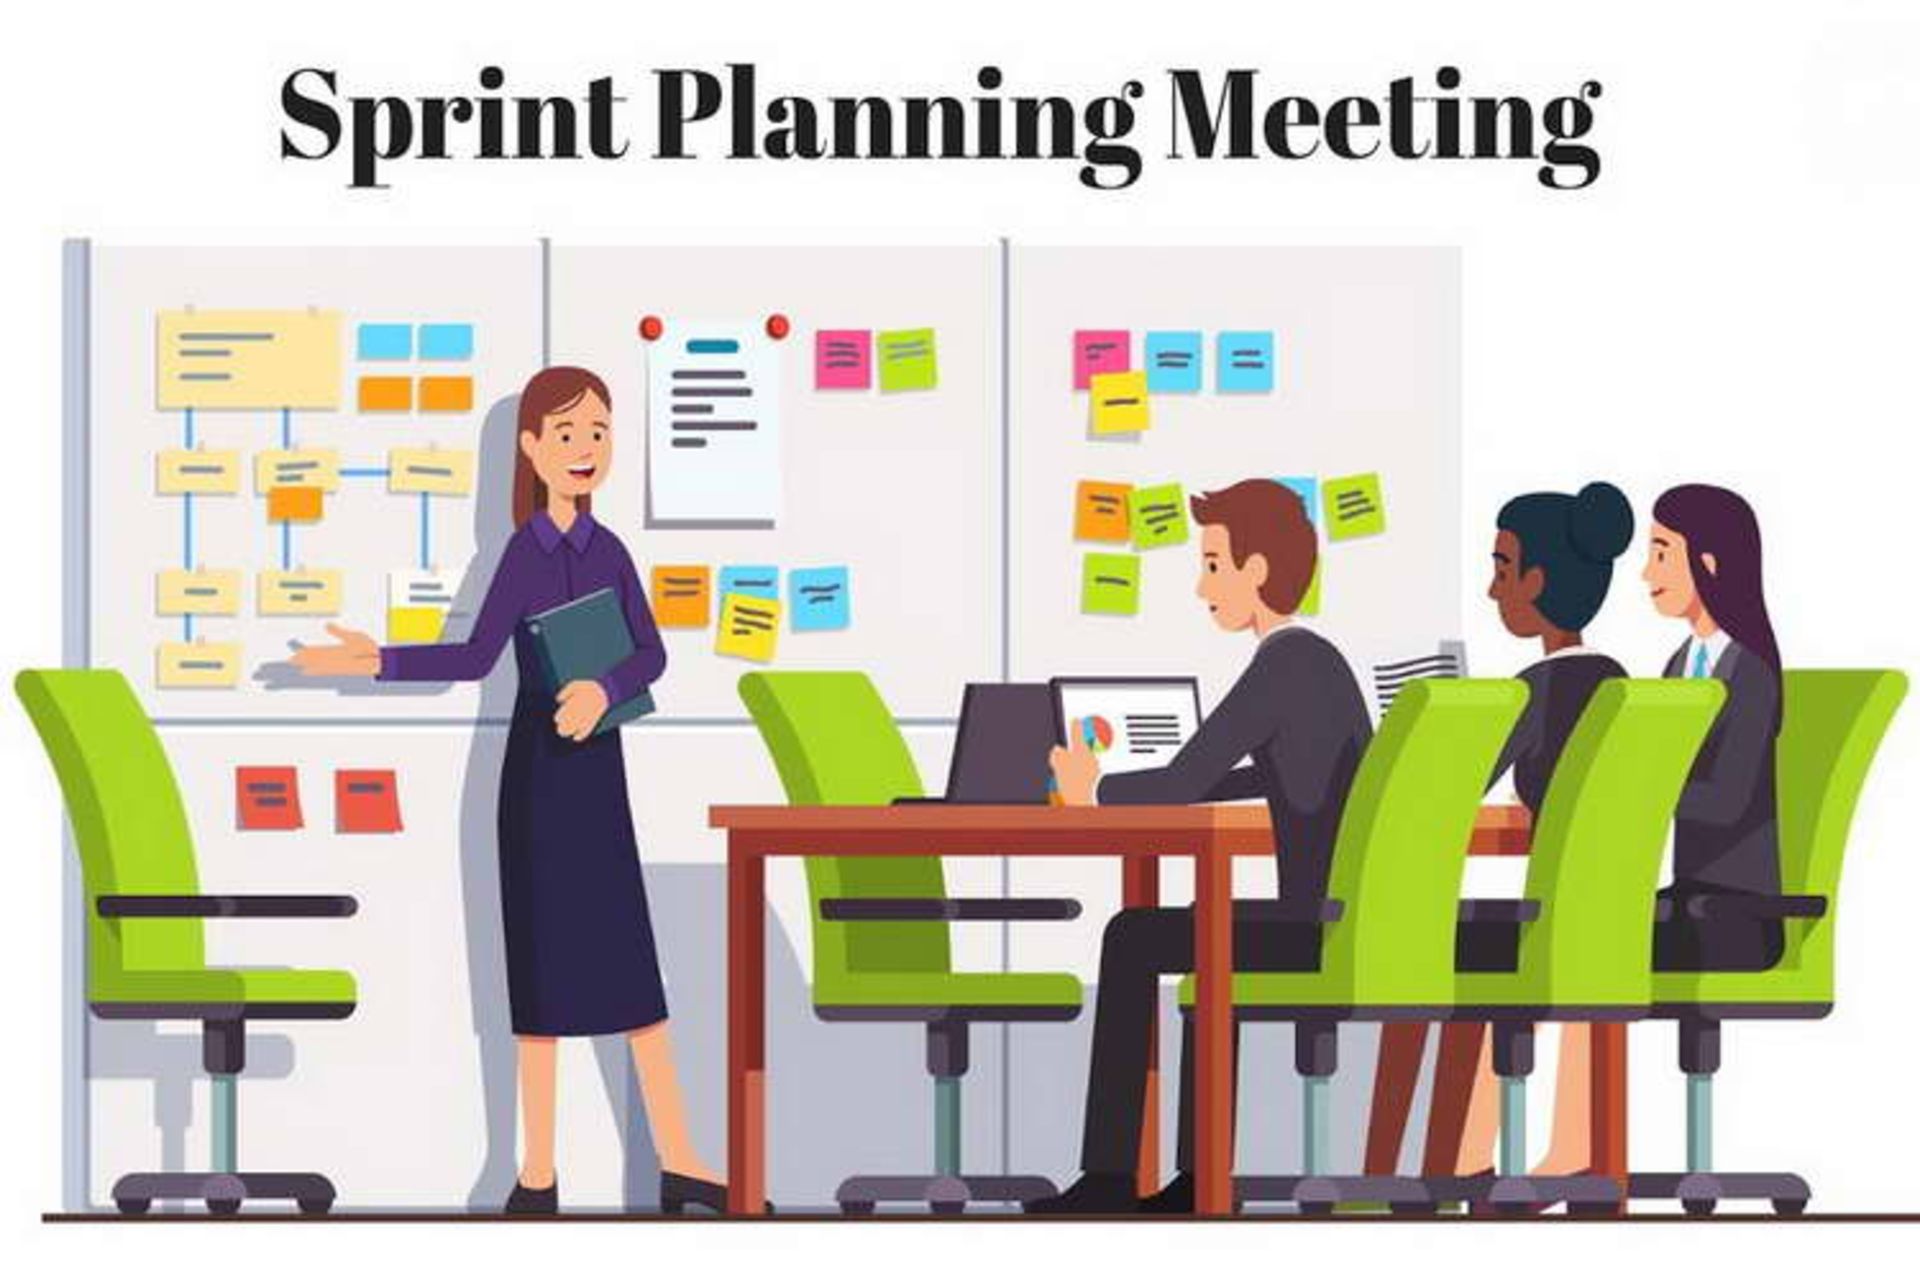 Sprint Planning meeting